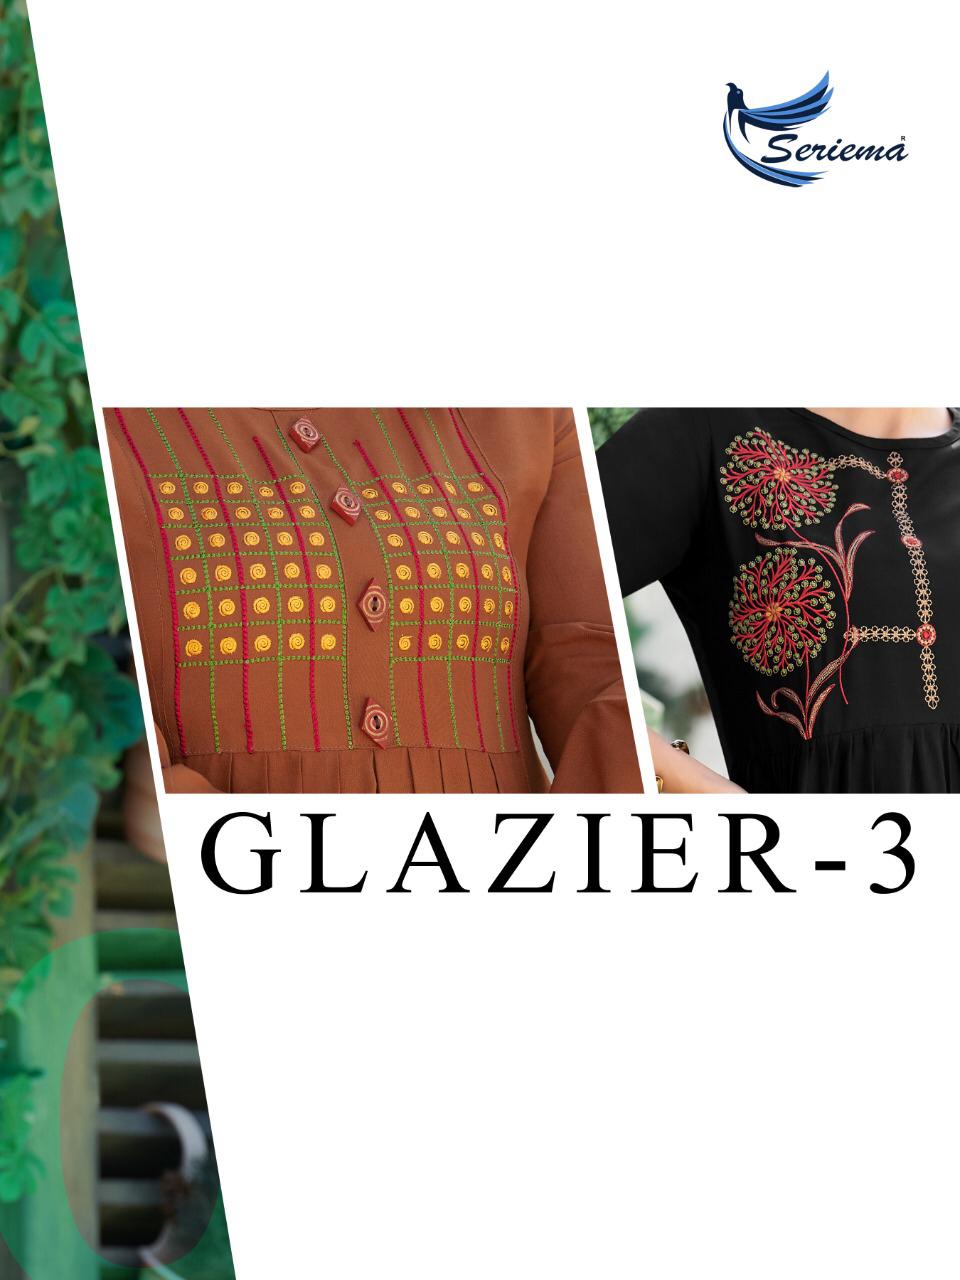 seriema glazier 3 stylish look top catalog